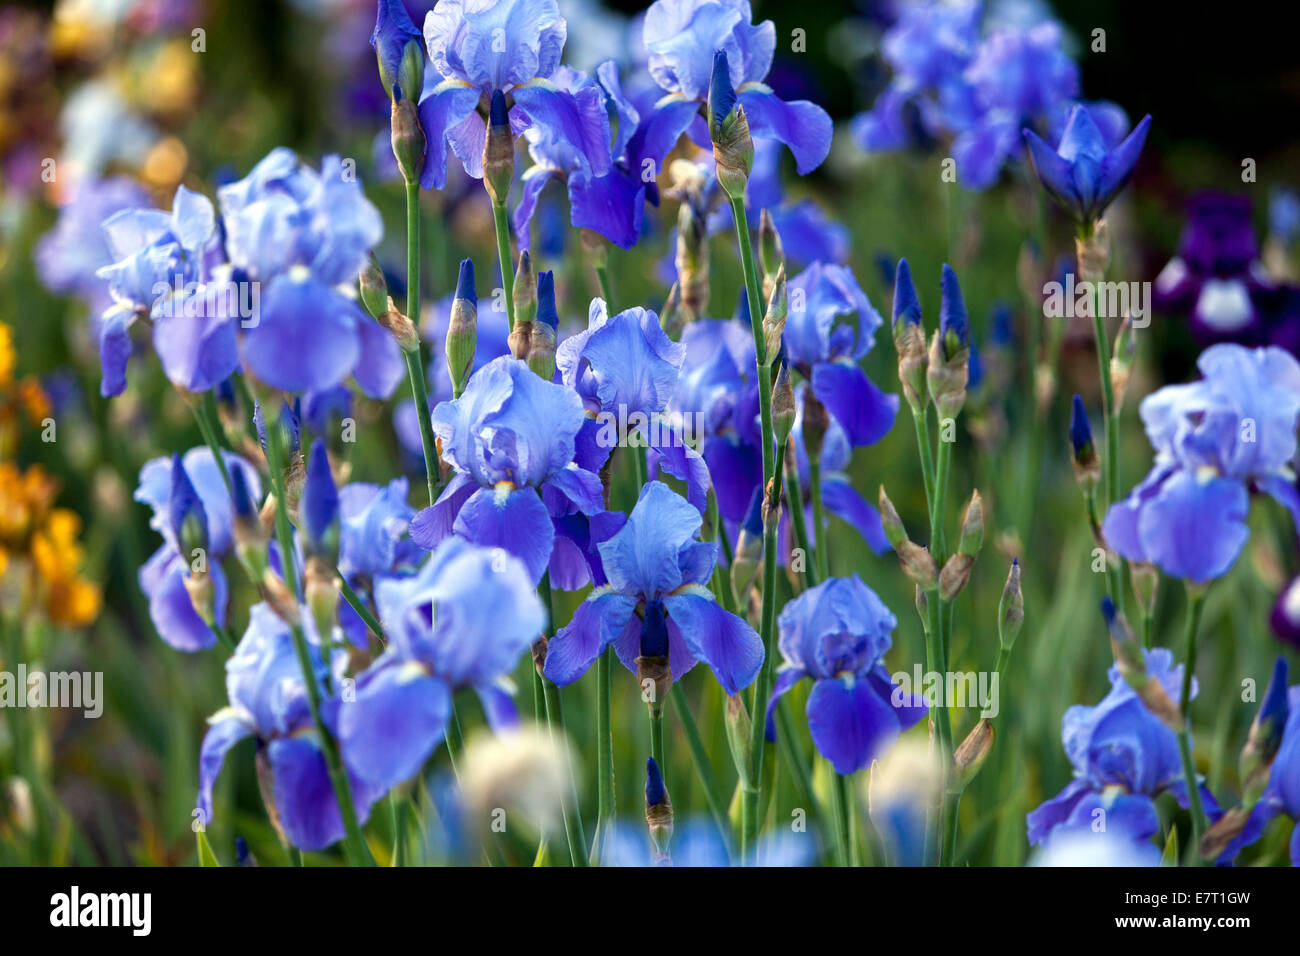 Tall Bearded Iris in garden Iris flower blue irises, garden flowers in bed, beautiful garden flowers border Stock Photo